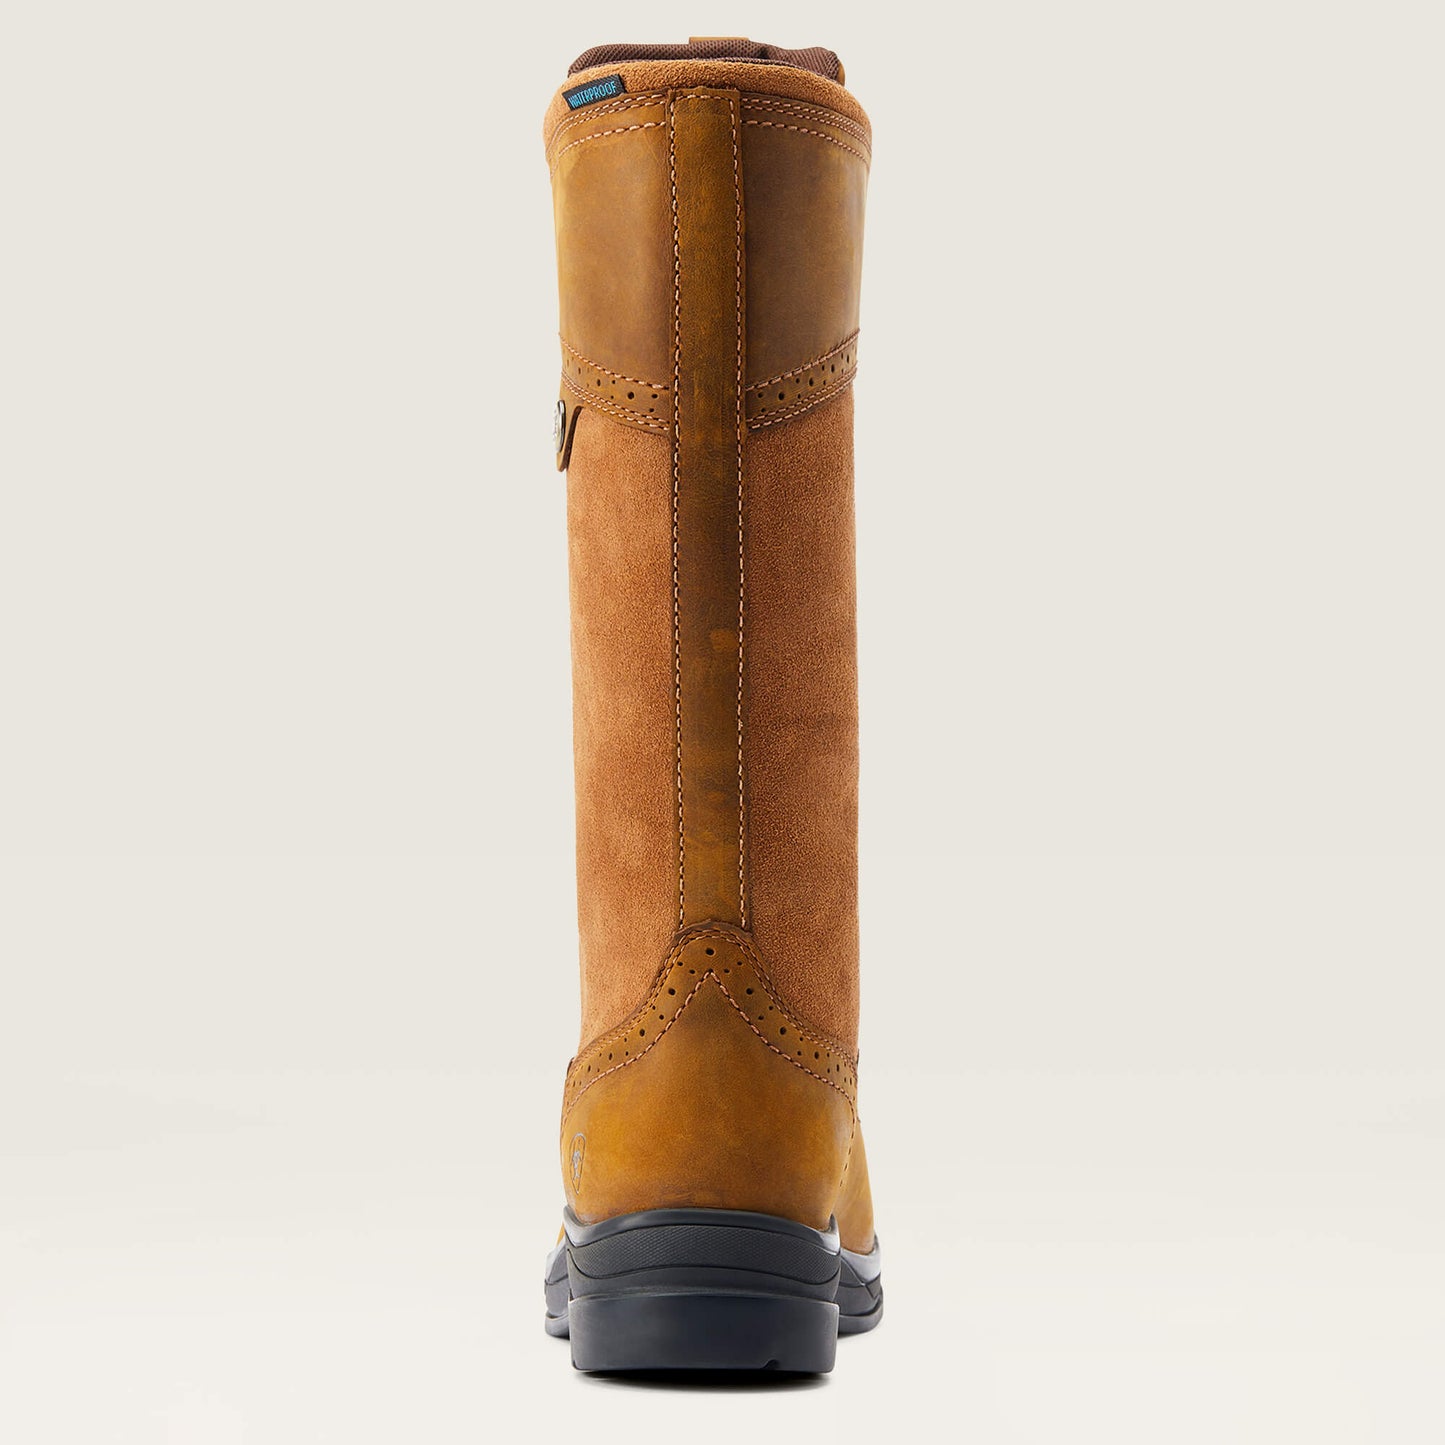 Ariat Wythburn II Waterproof Insulated Boot